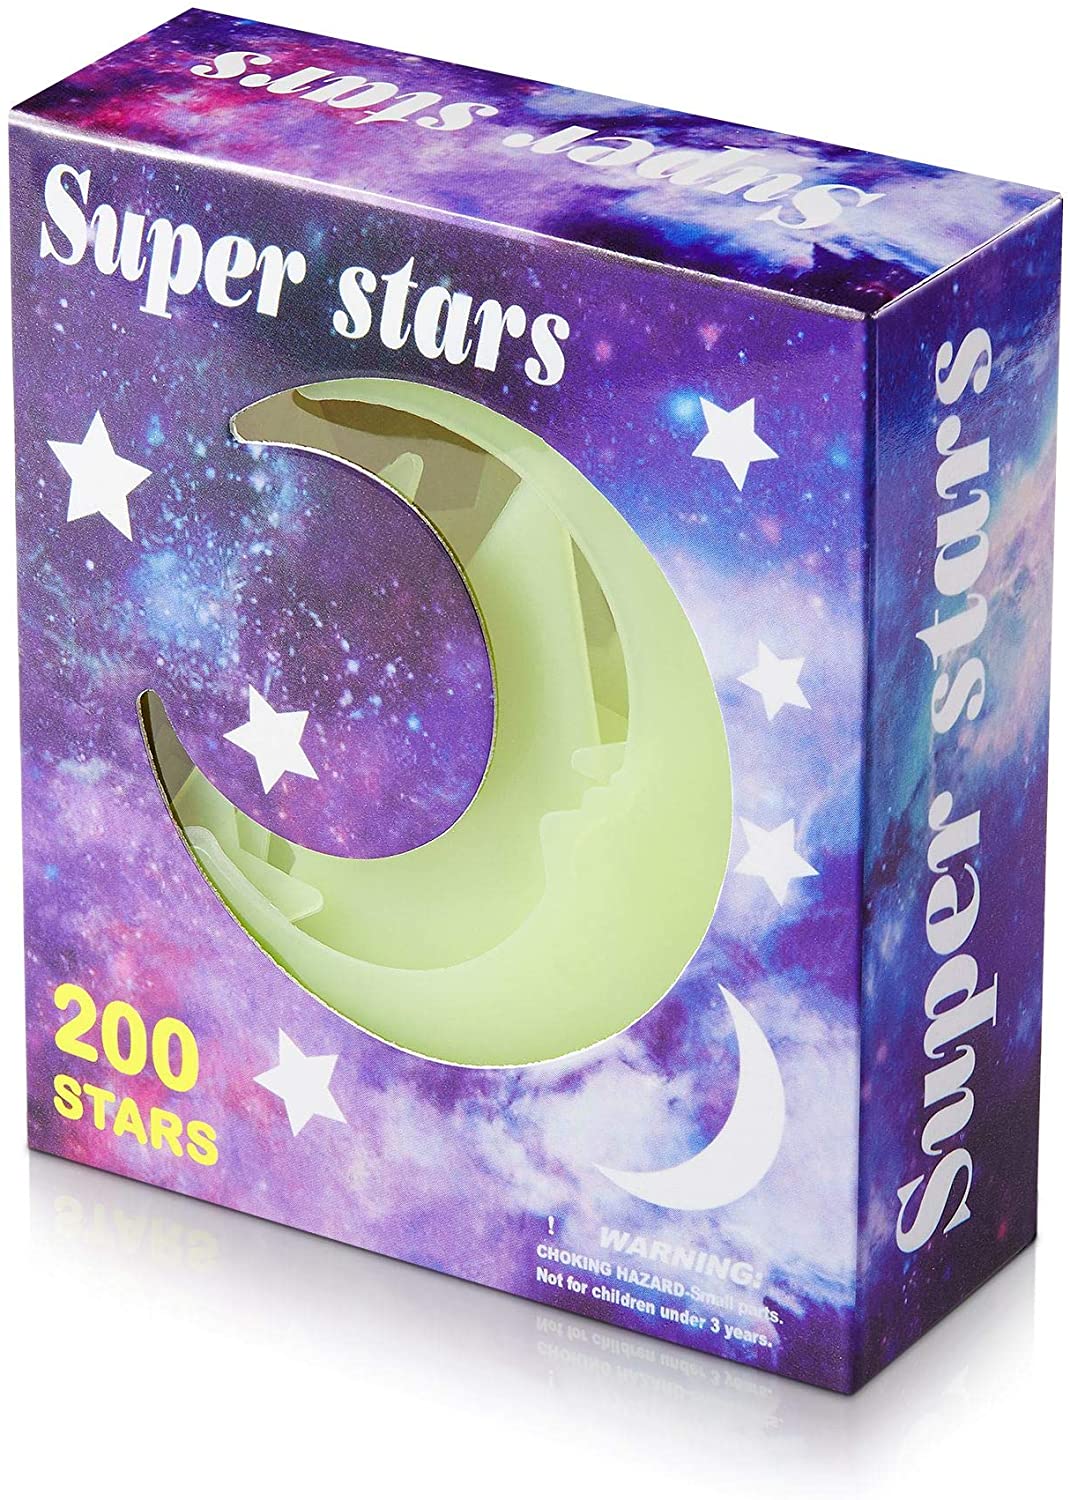 Stars and Moon Luminous Room Sticker